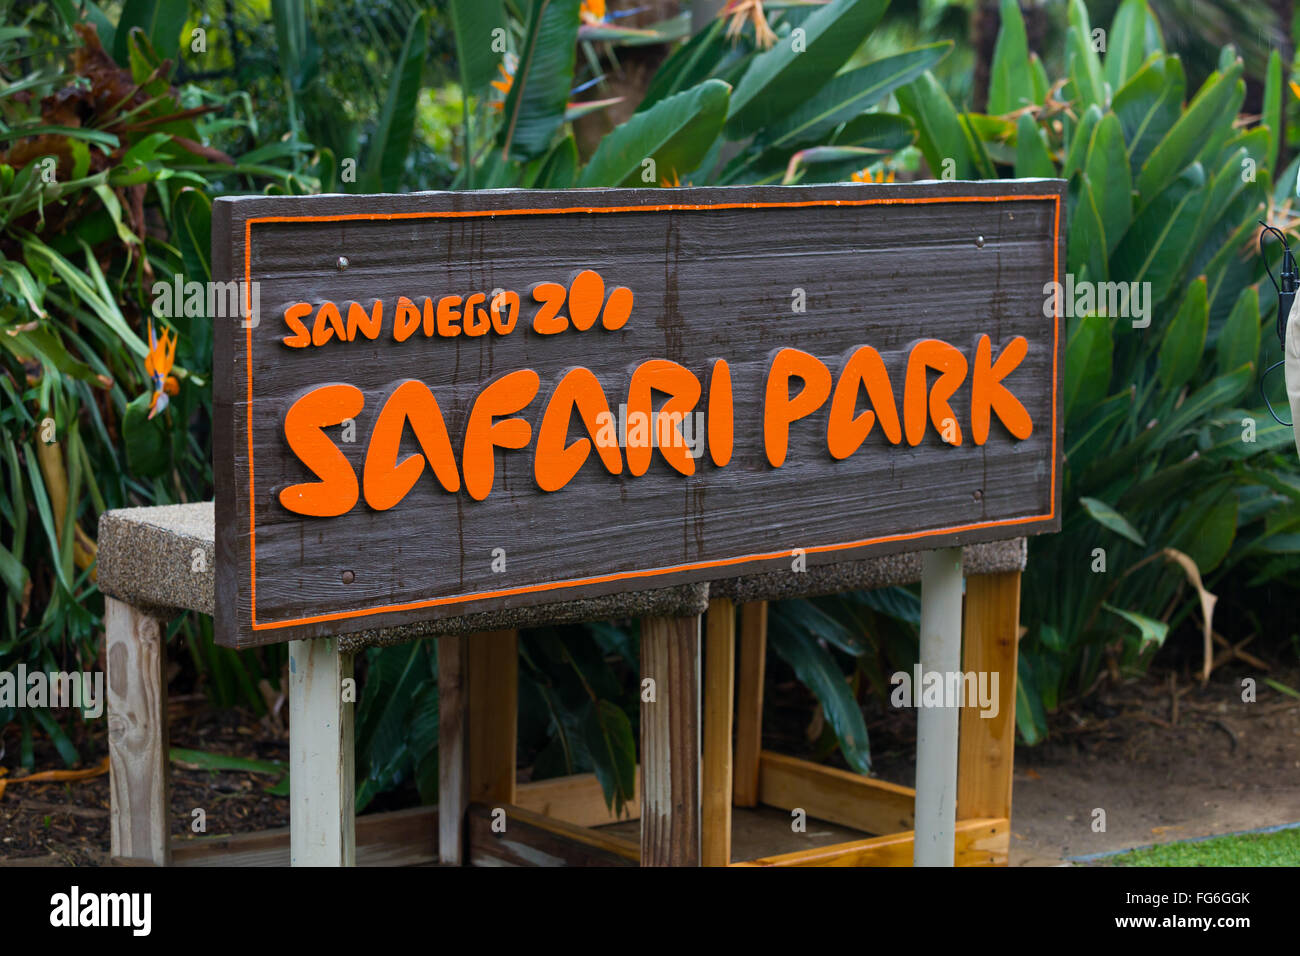 Sign for the San Diego Zoo Safari Park in California. Stock Photo